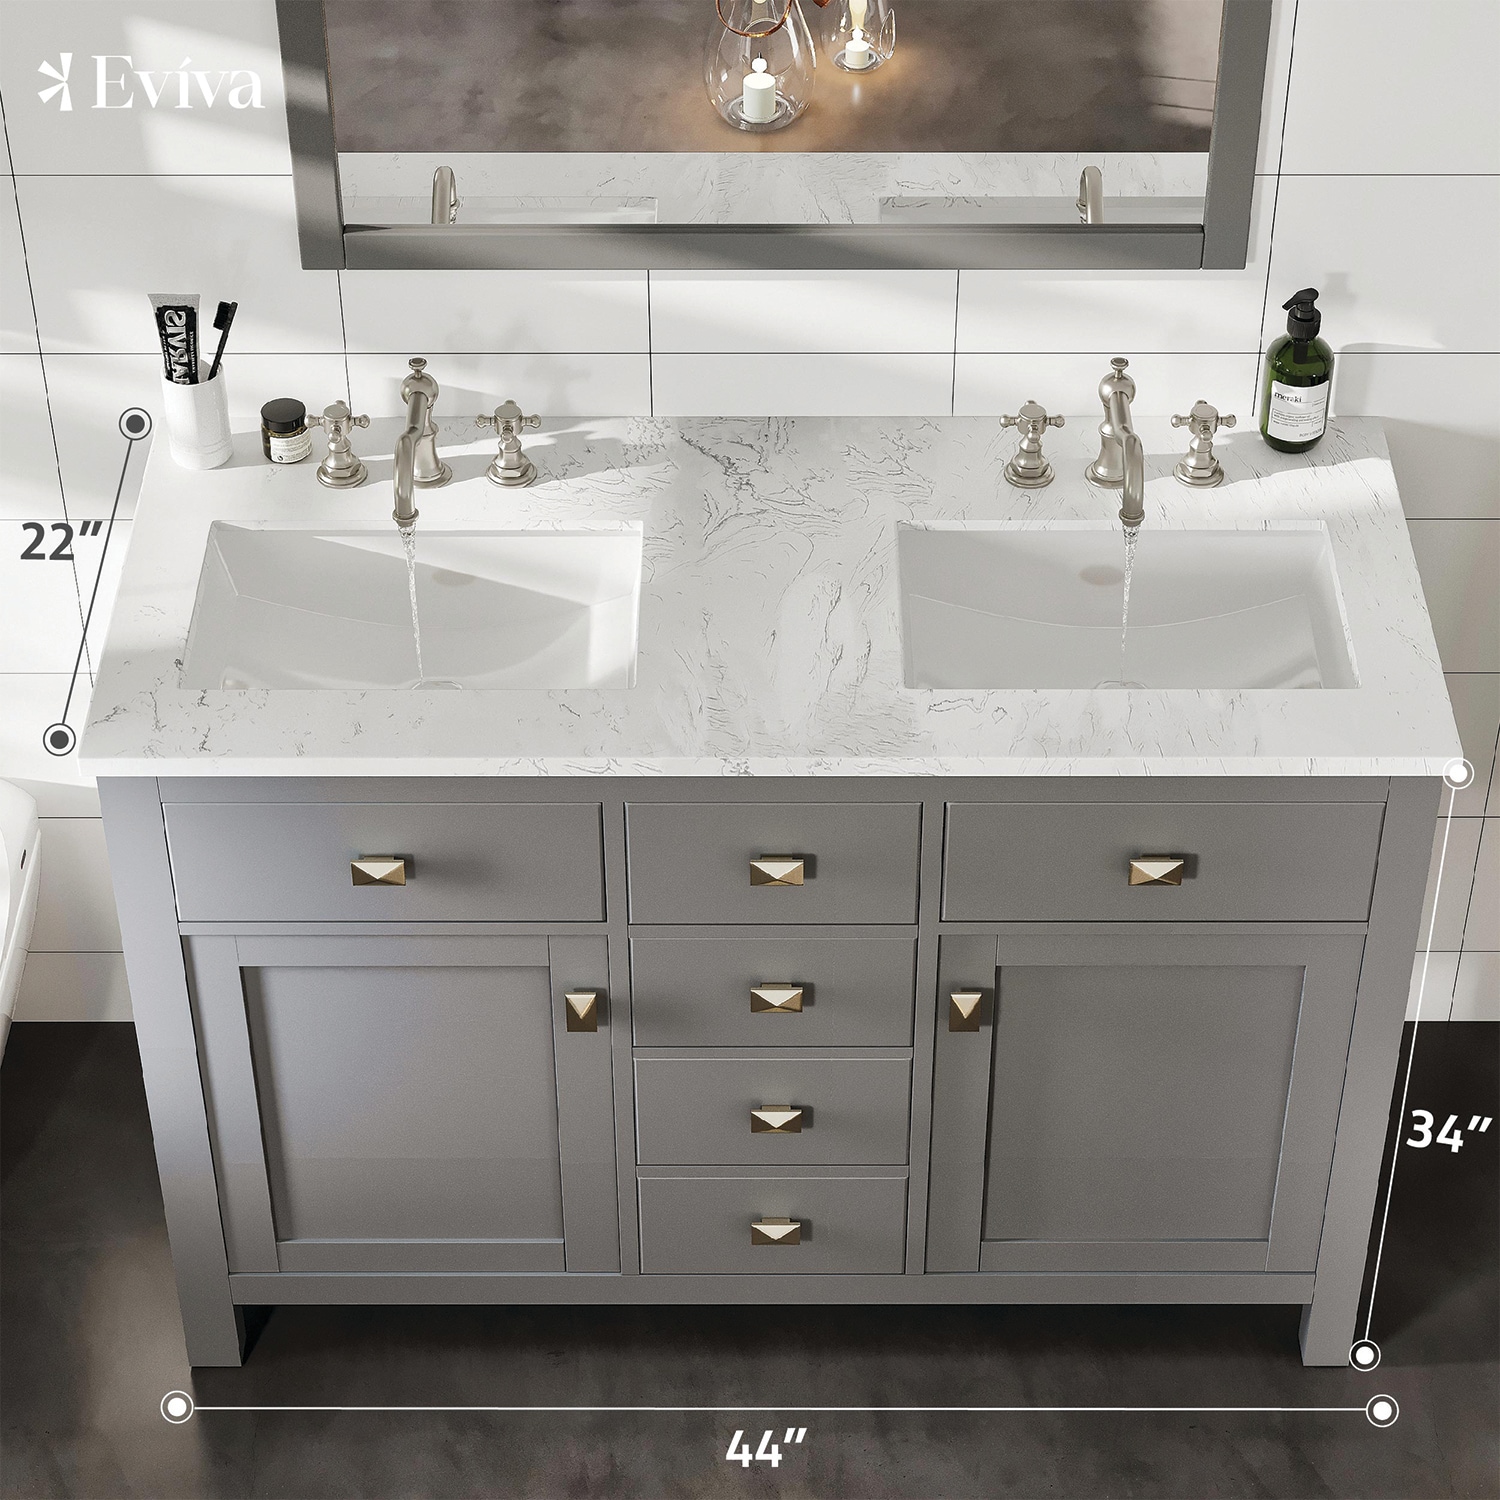 eviva 44-in gray undermount double sink bathroom vanity with white